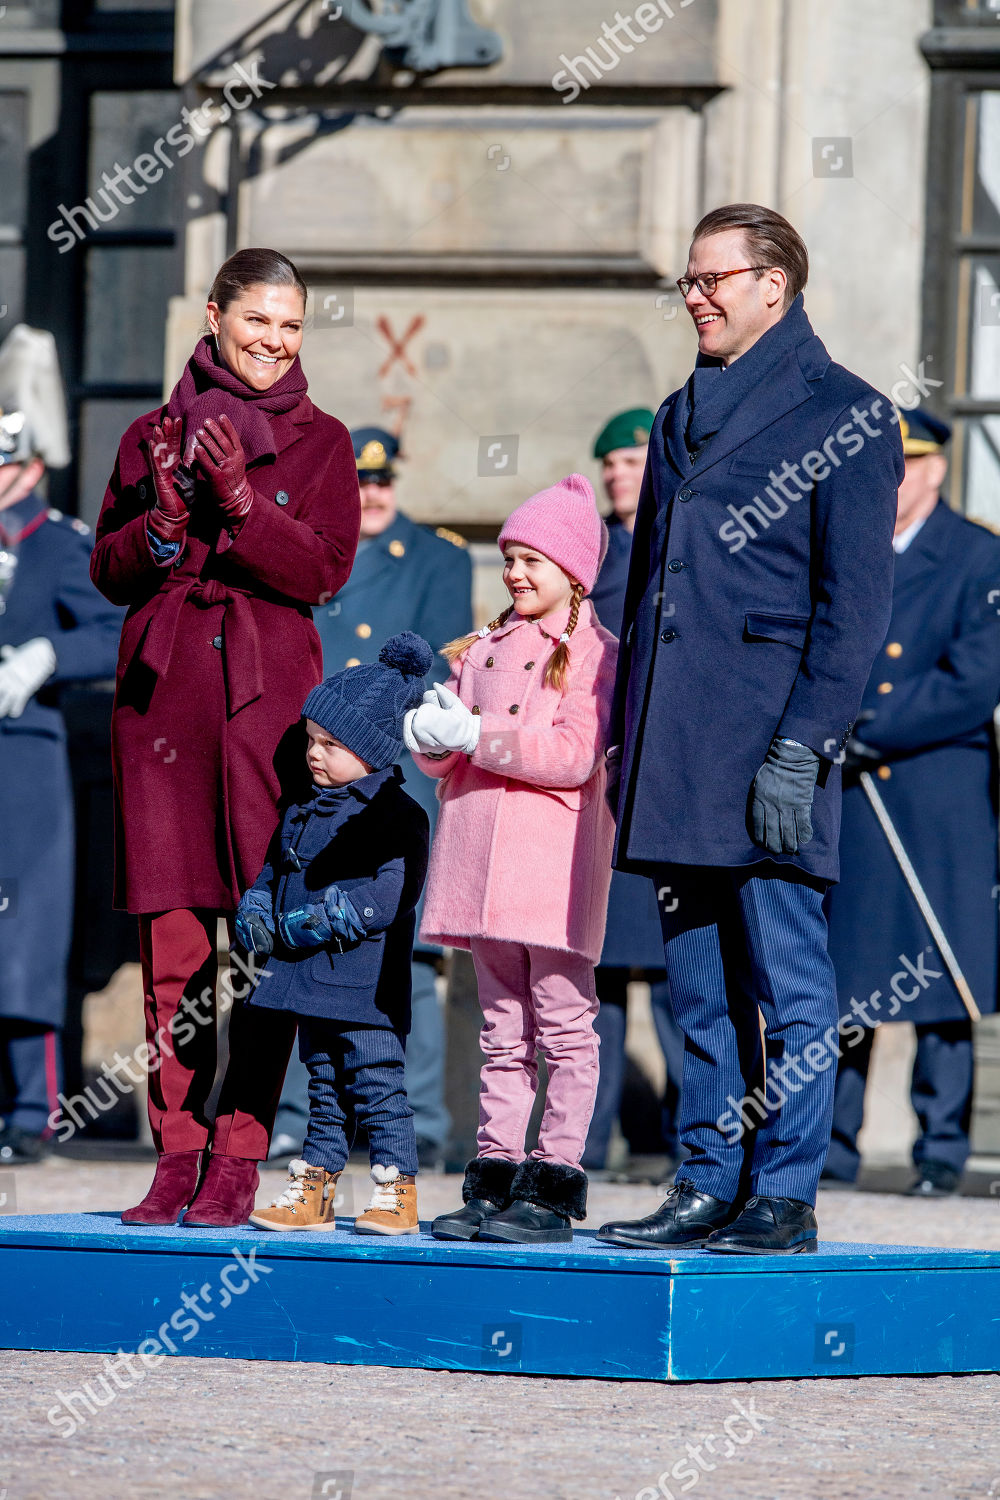 crown-princess-victoria-name-day-celebrations-stockholm-sweden-shutterstock-editorial-10151872am.jpg